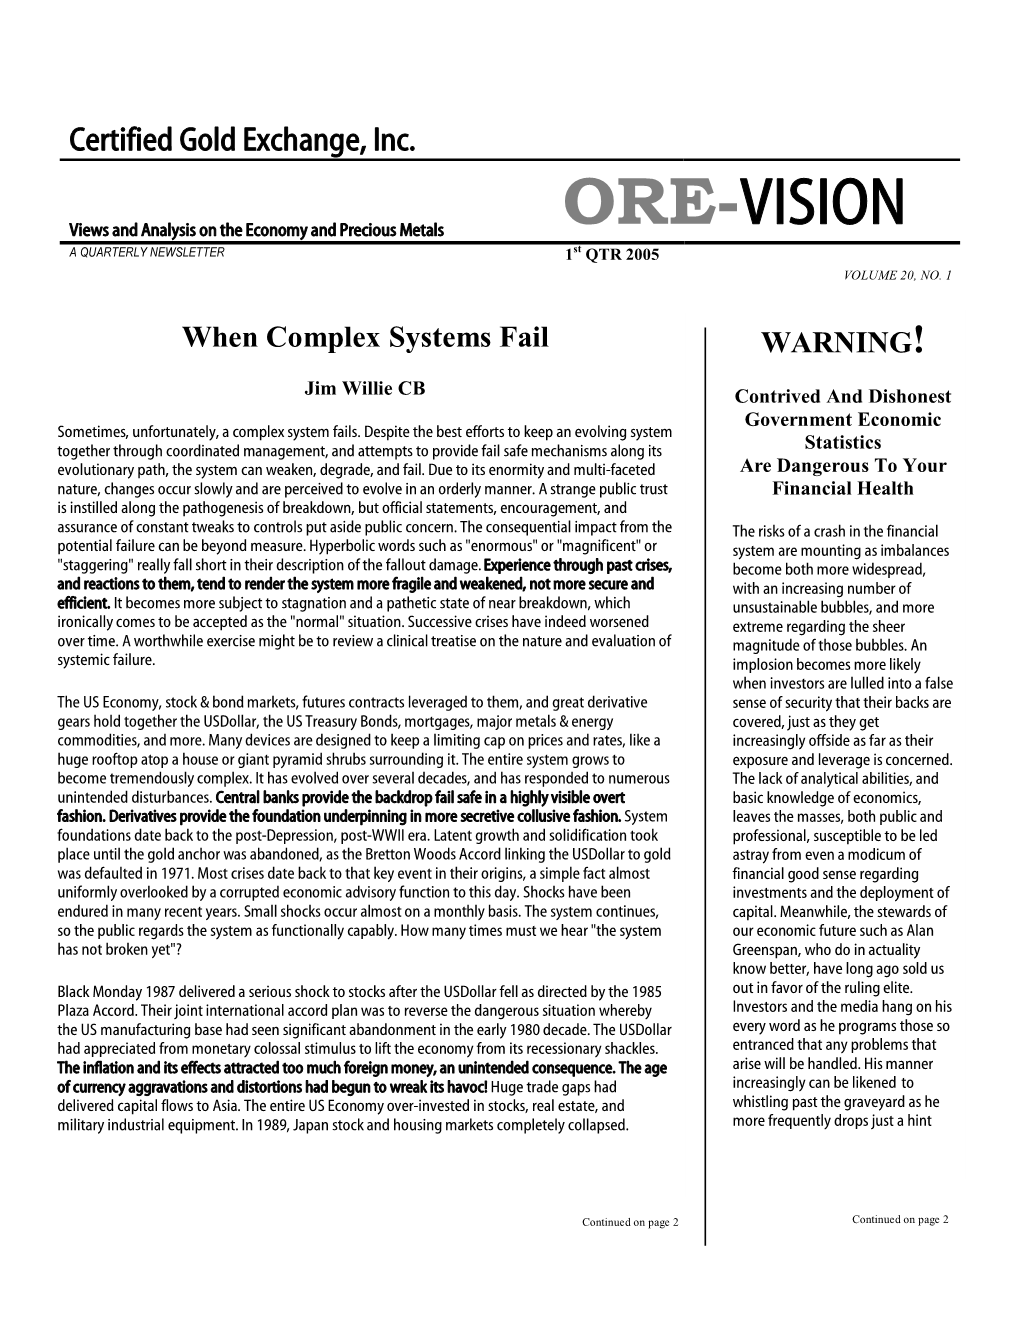 ORE-VISION a QUARTERLY NEWSLETTER 1St QTR 2005 VOLUME 20, NO